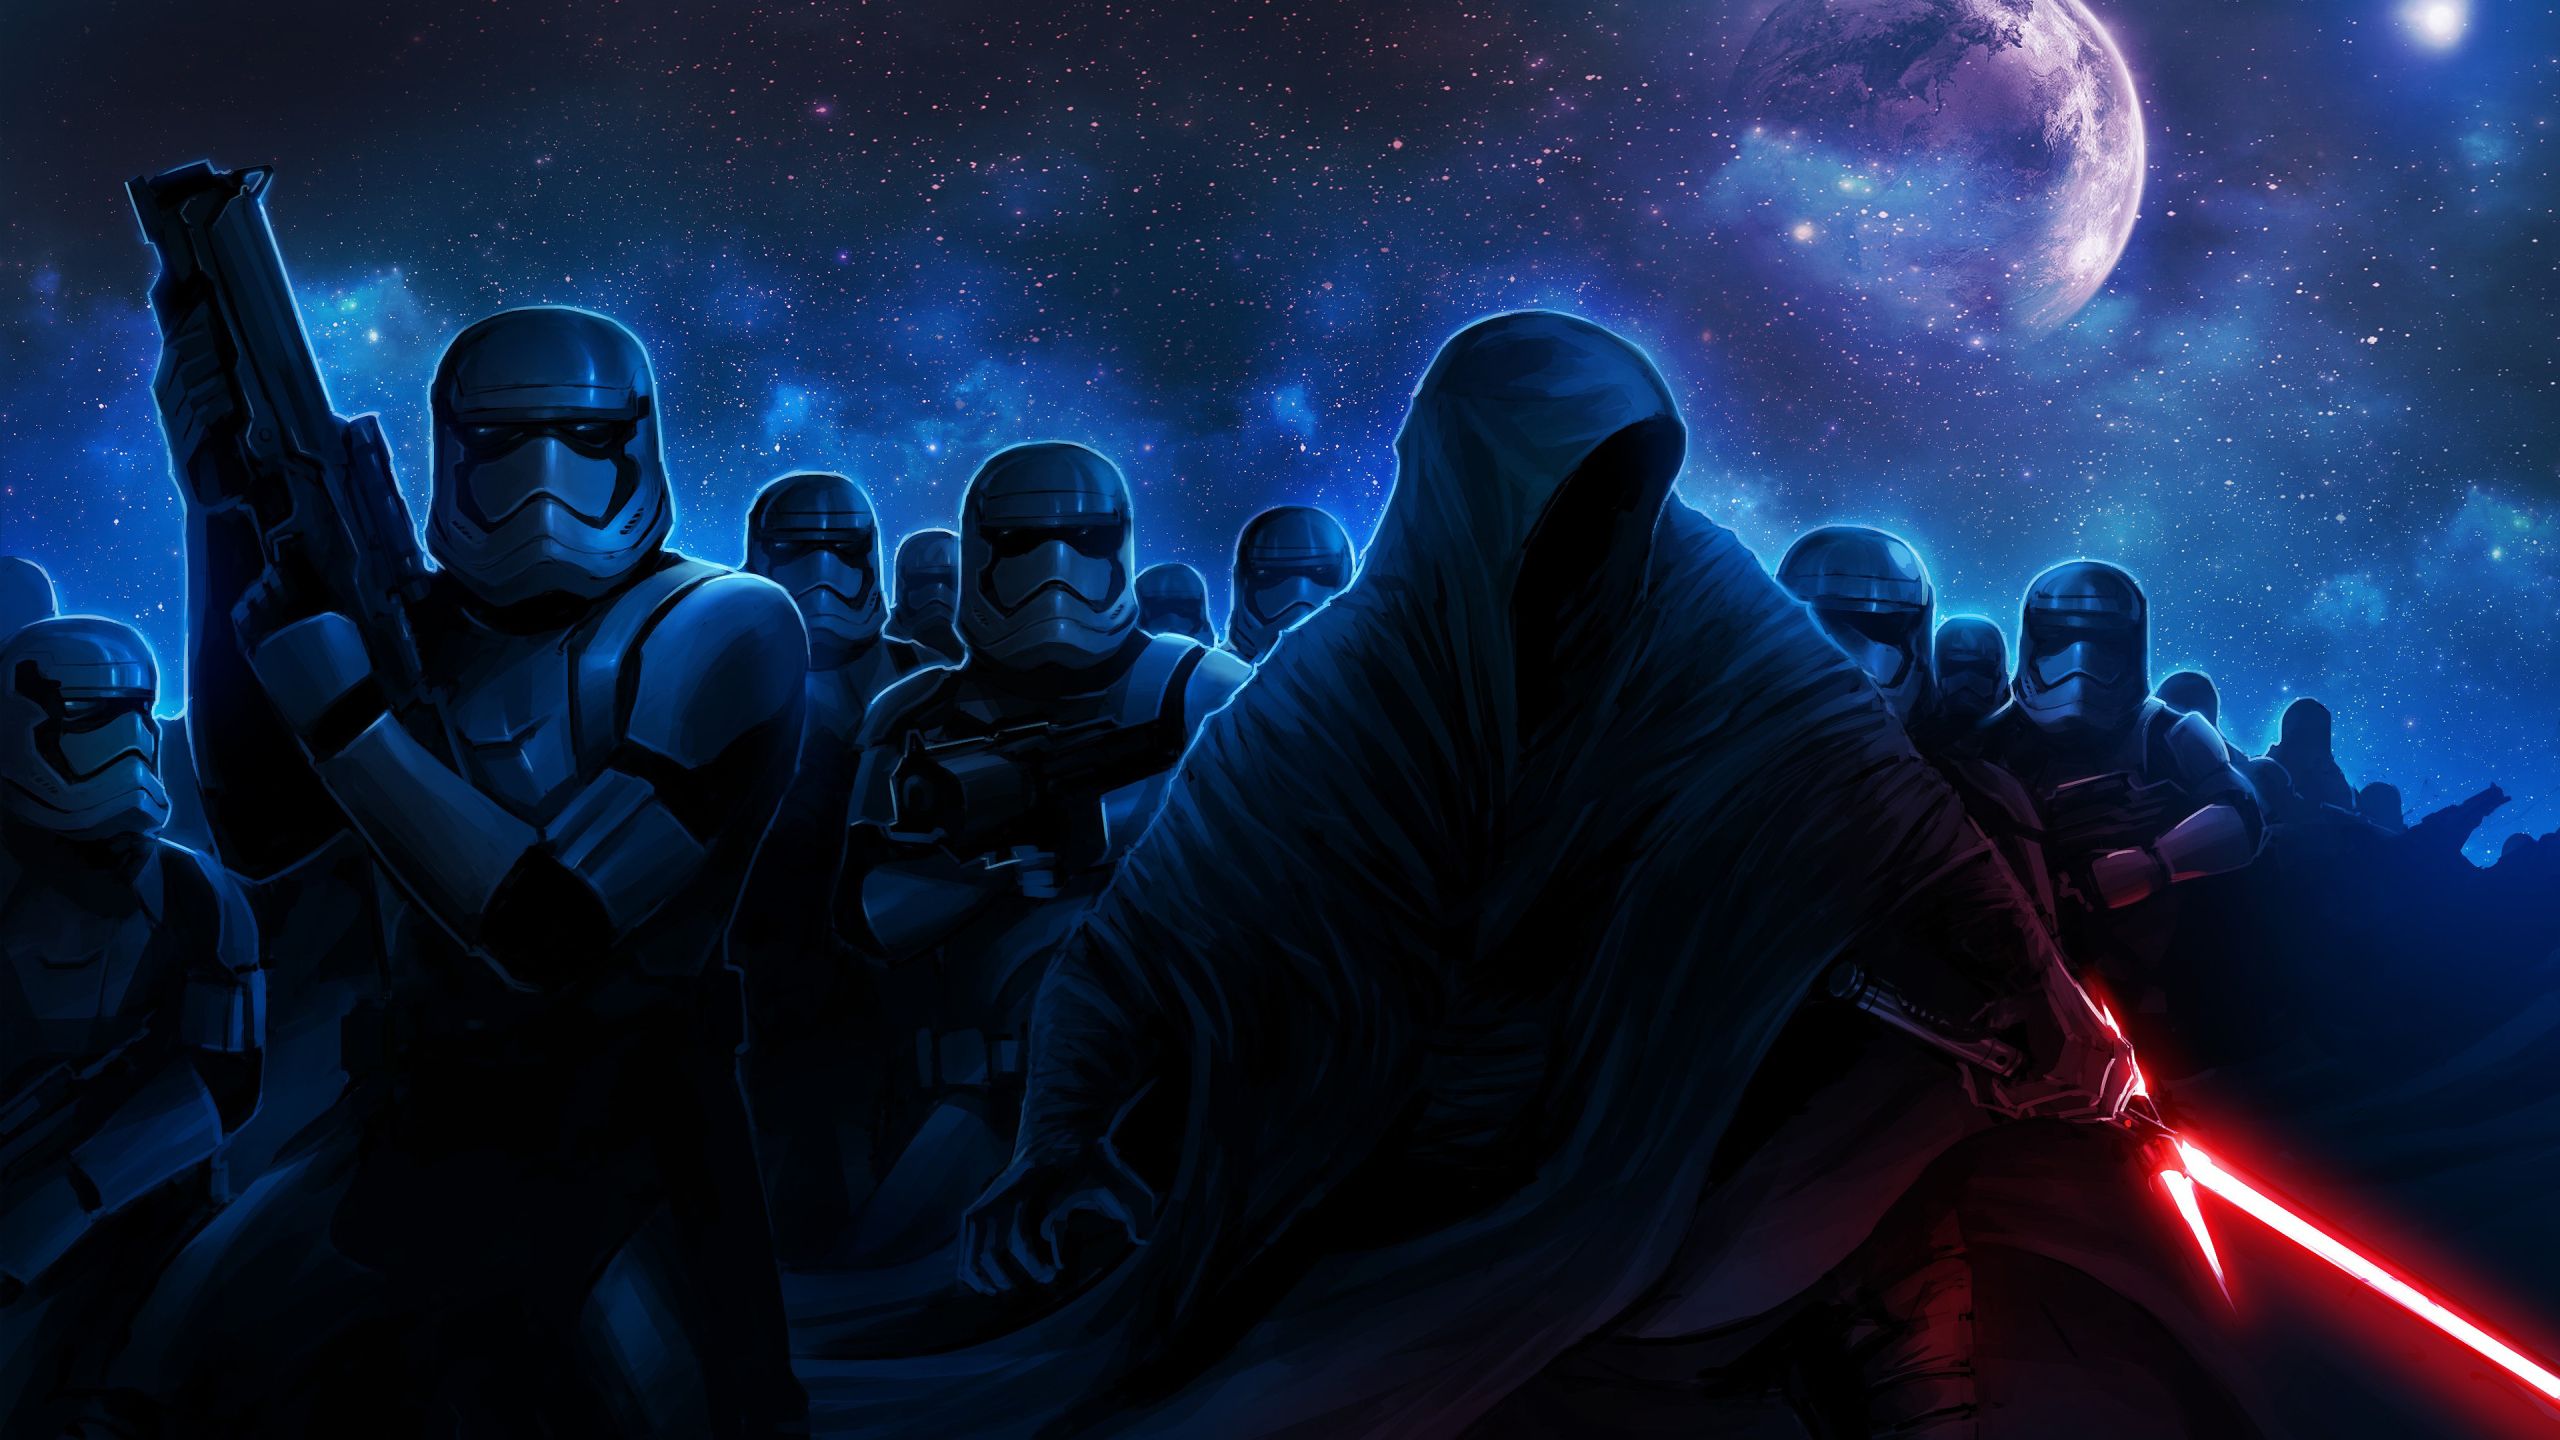 Stormtroopers Darth Vader wallpaper in 2560x1440 resolution